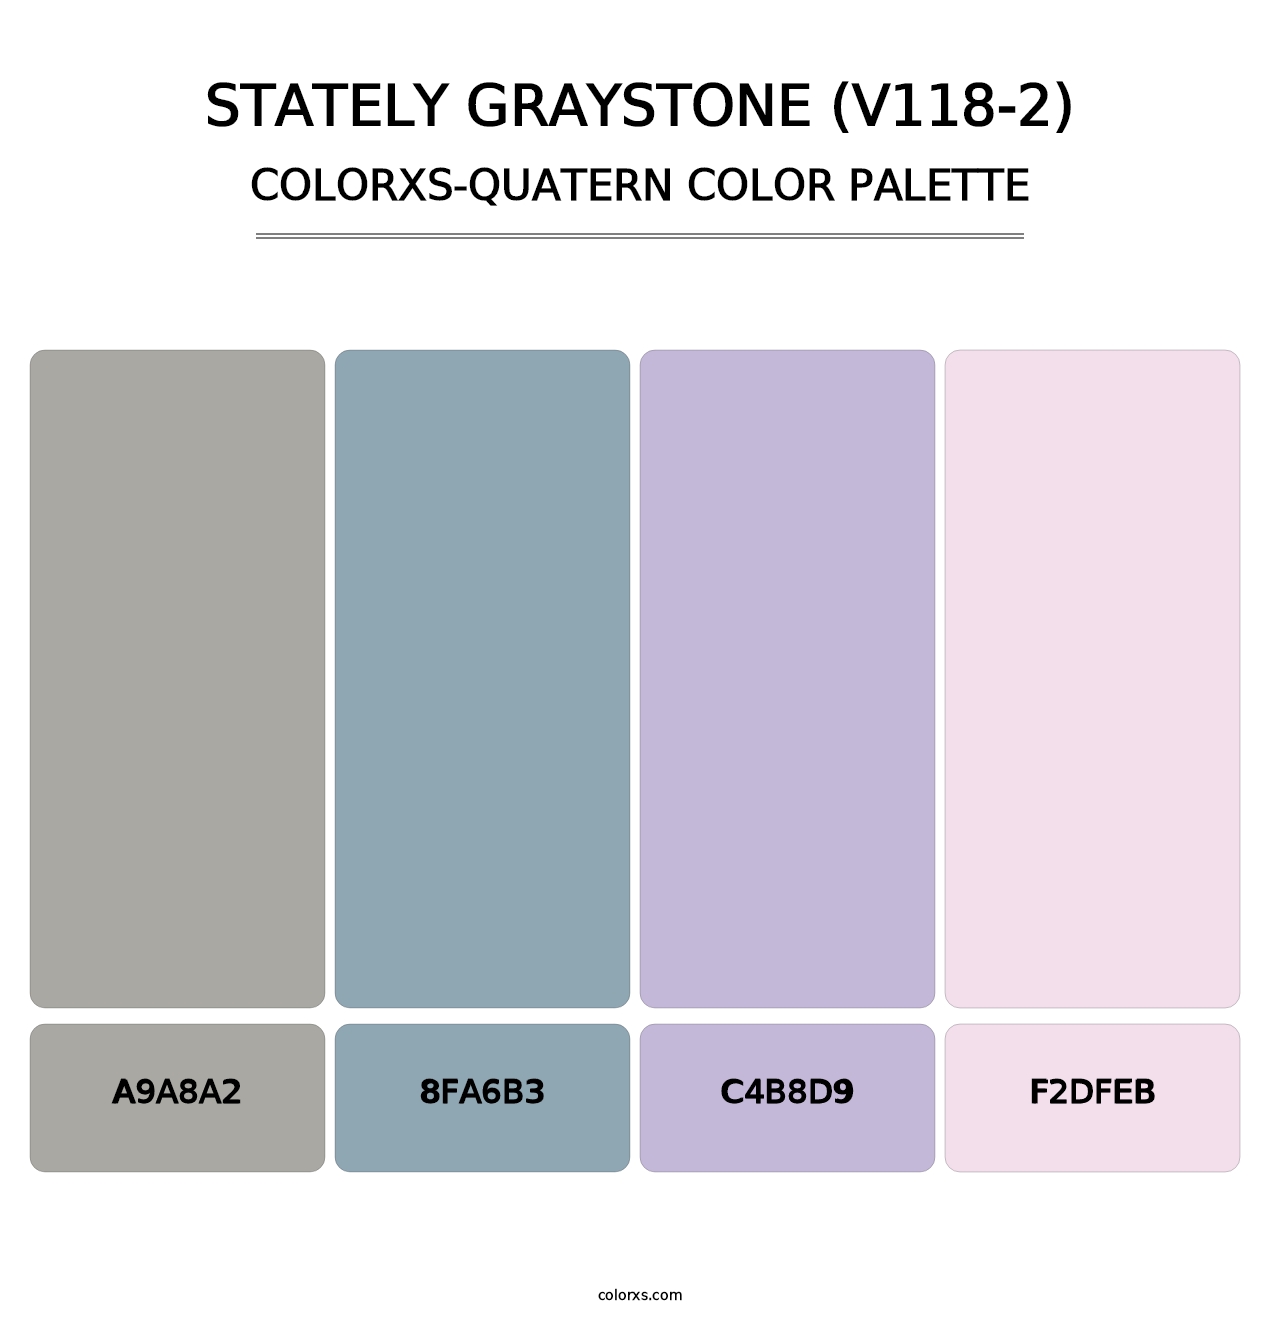 Stately Graystone (V118-2) - Colorxs Quatern Palette